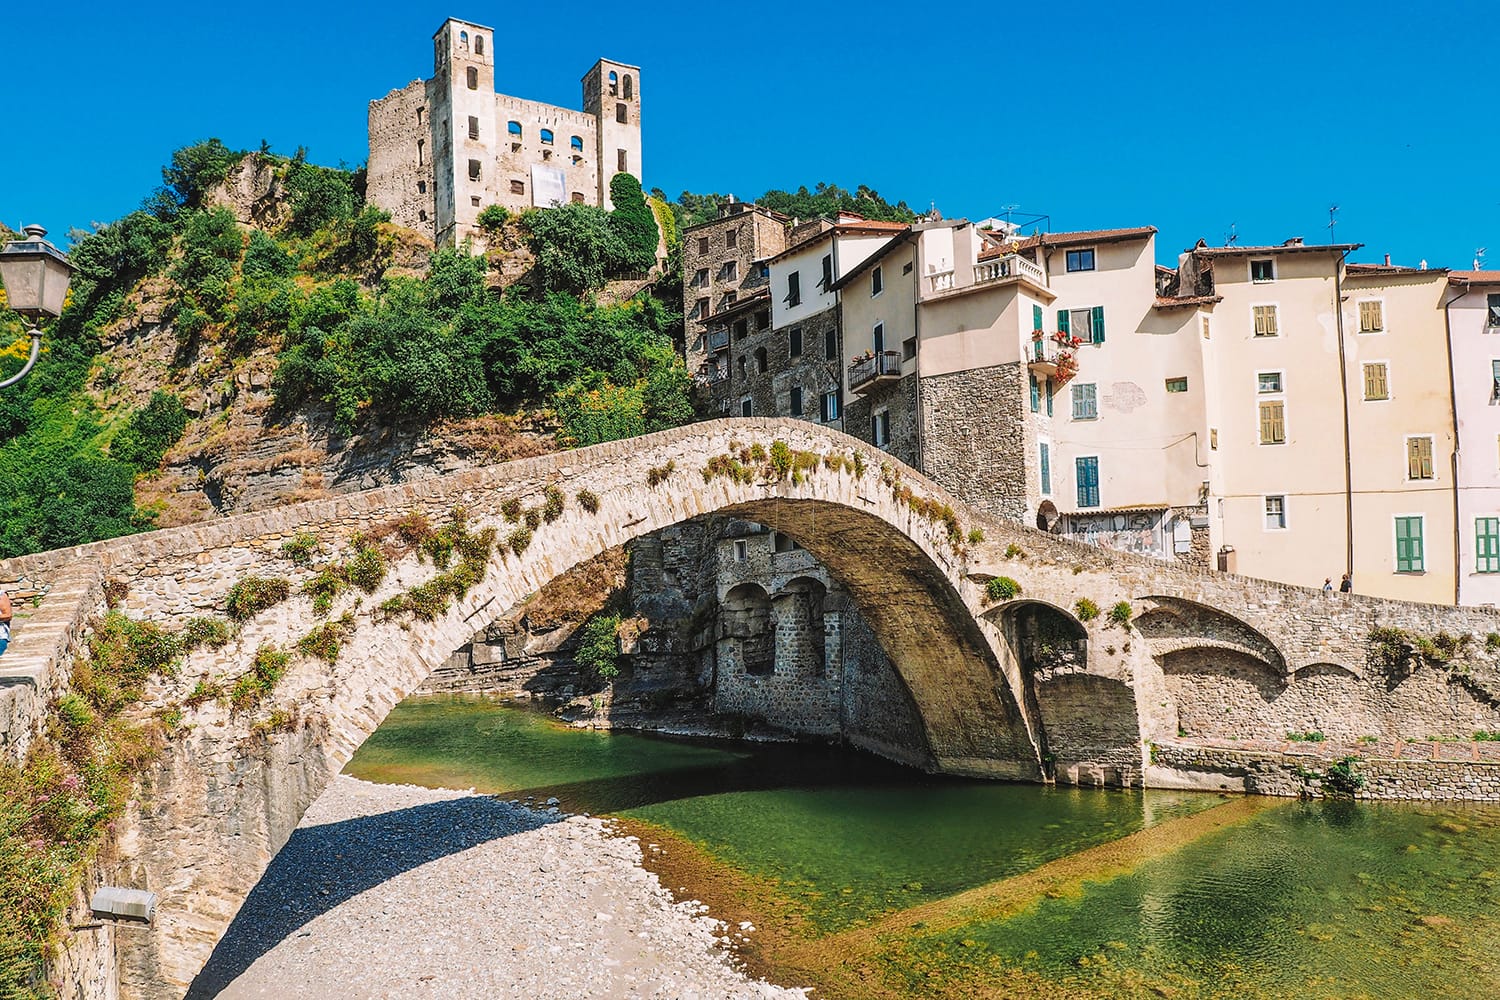 Venetian-style bridge in Dolceaqua, Italy